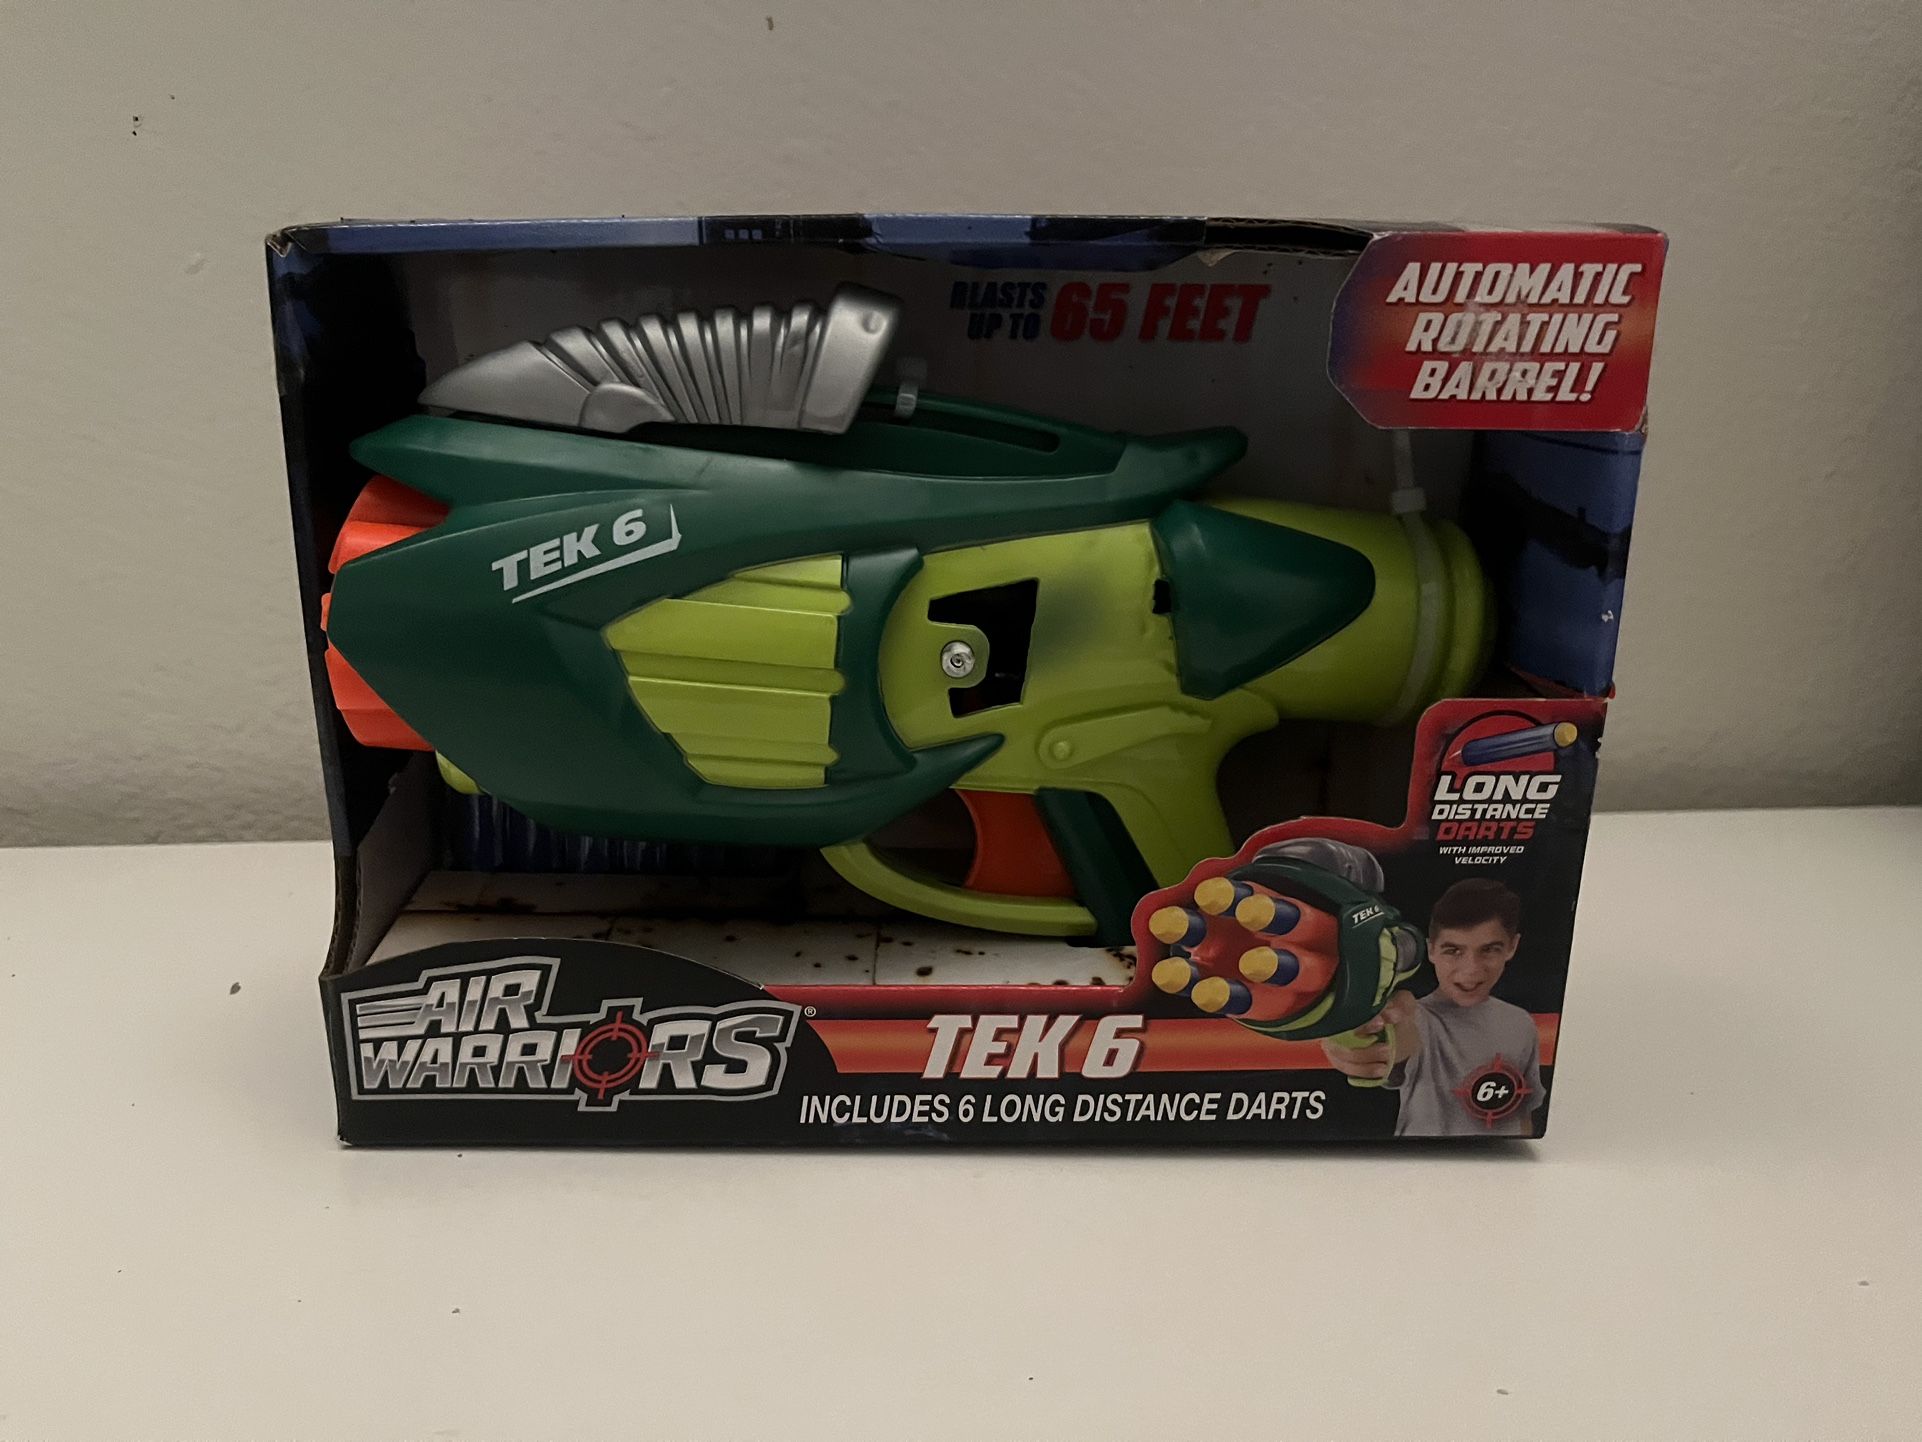 Air Warriors Toy Gun